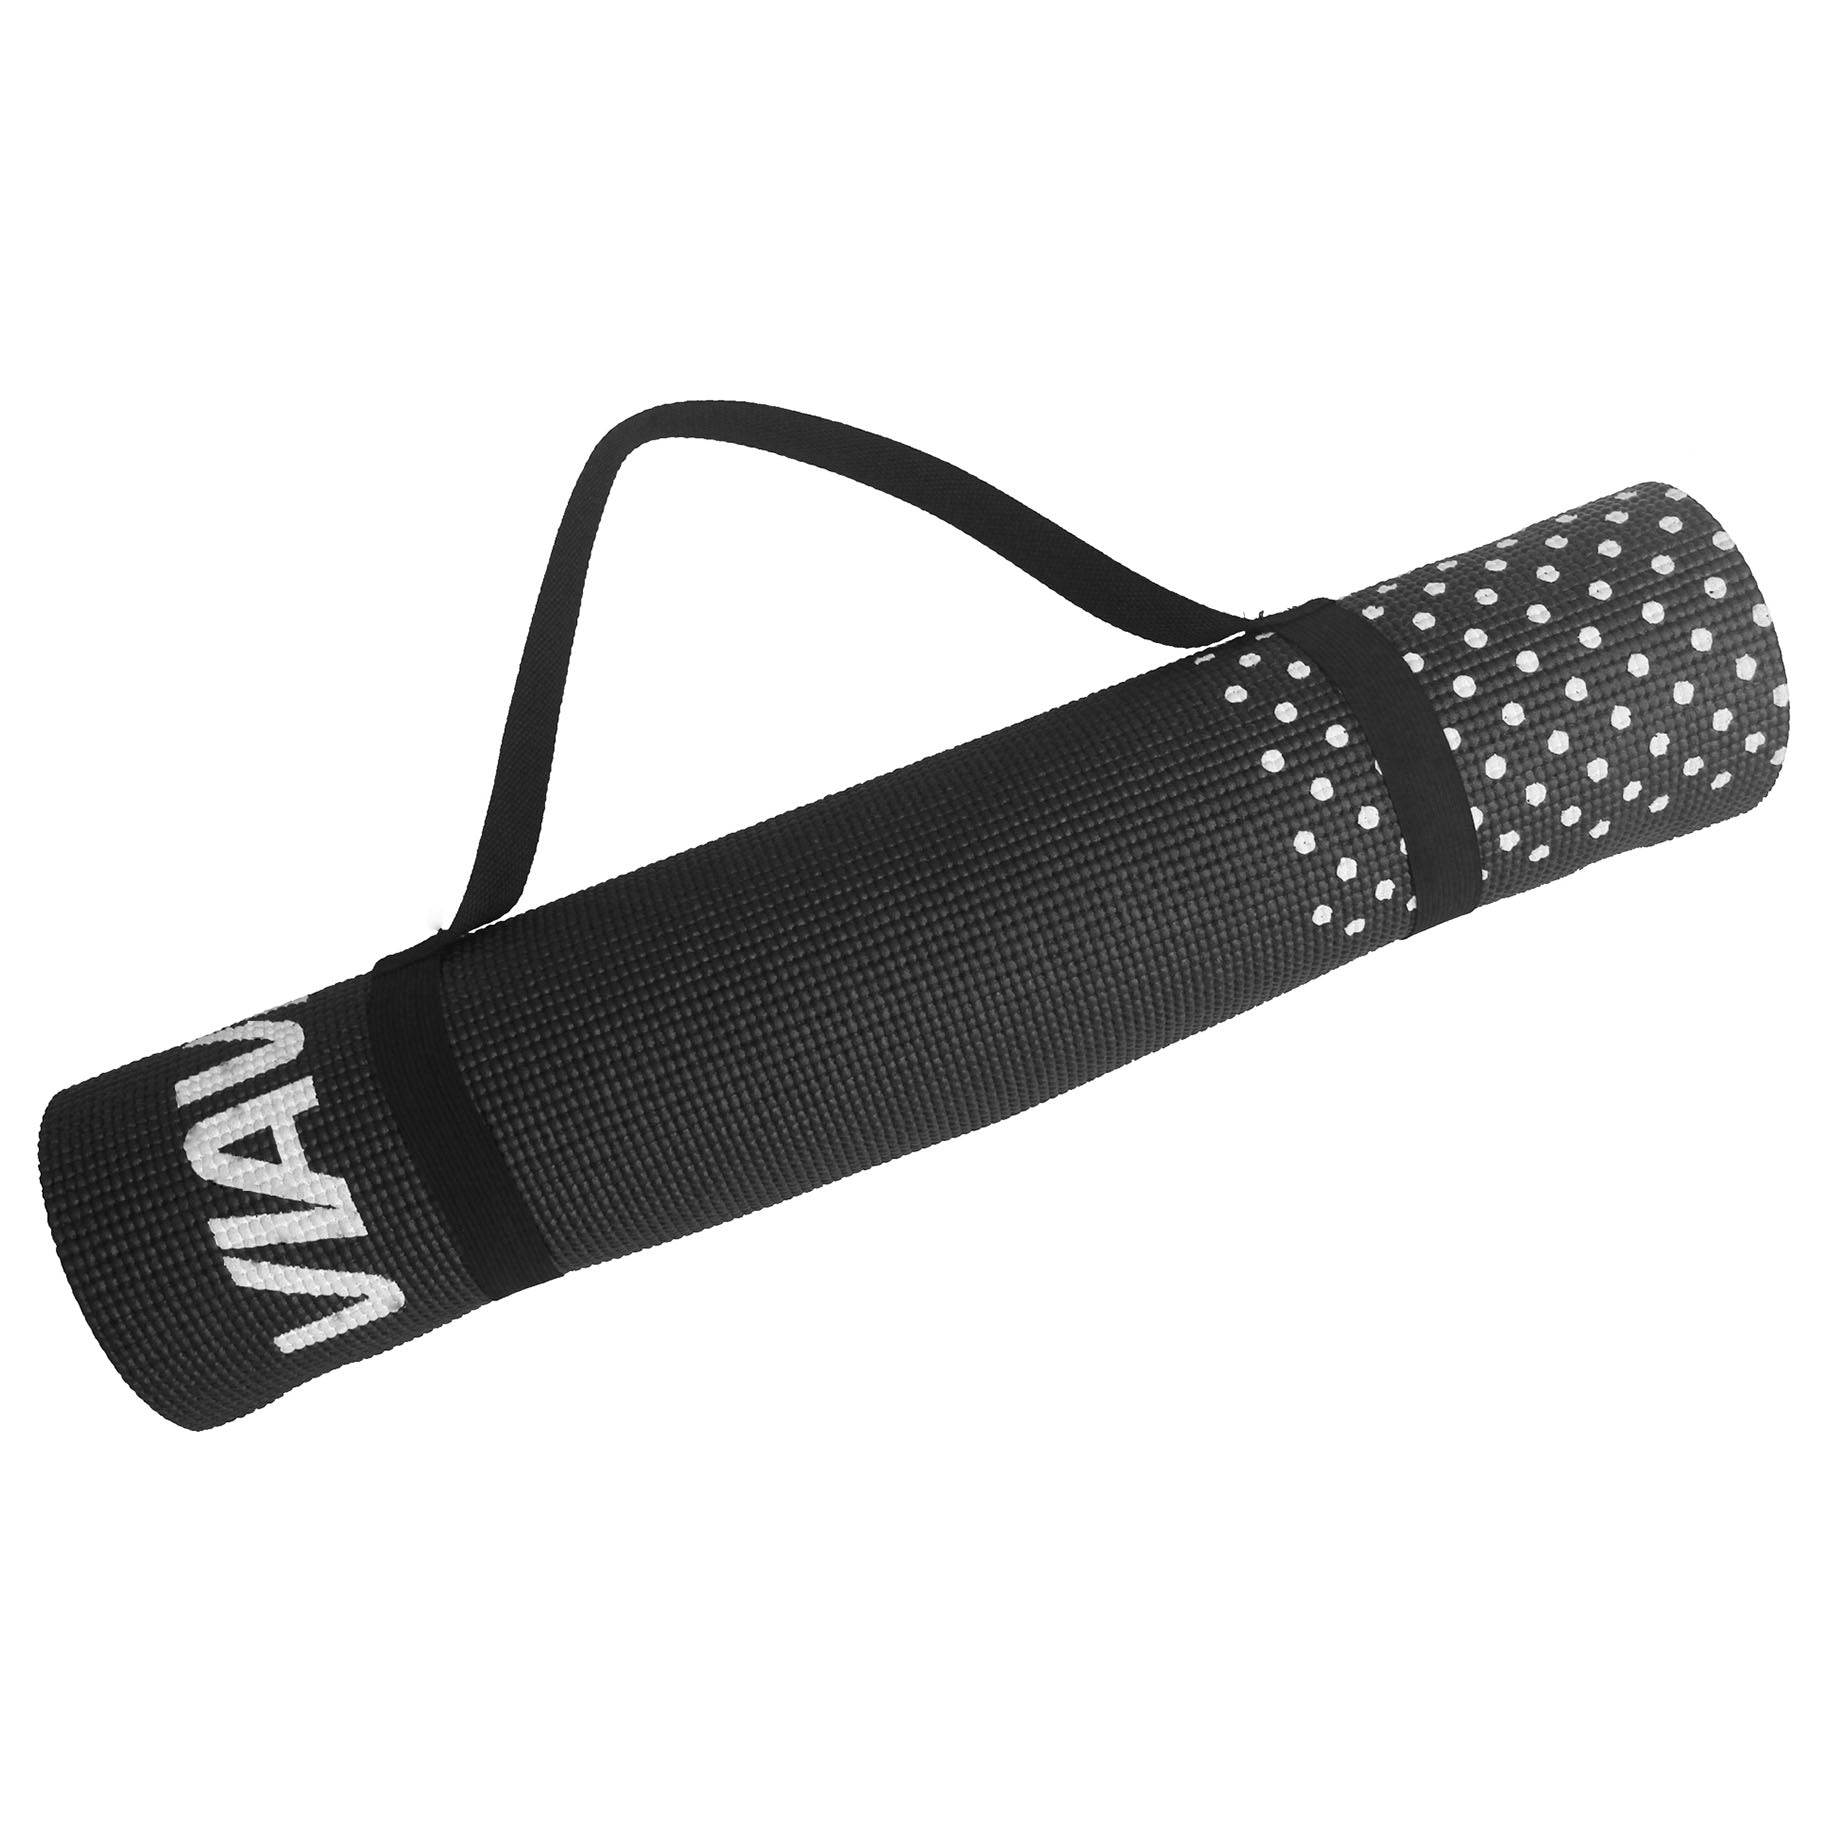 Casall Yoga Mat Carry Strap - Black